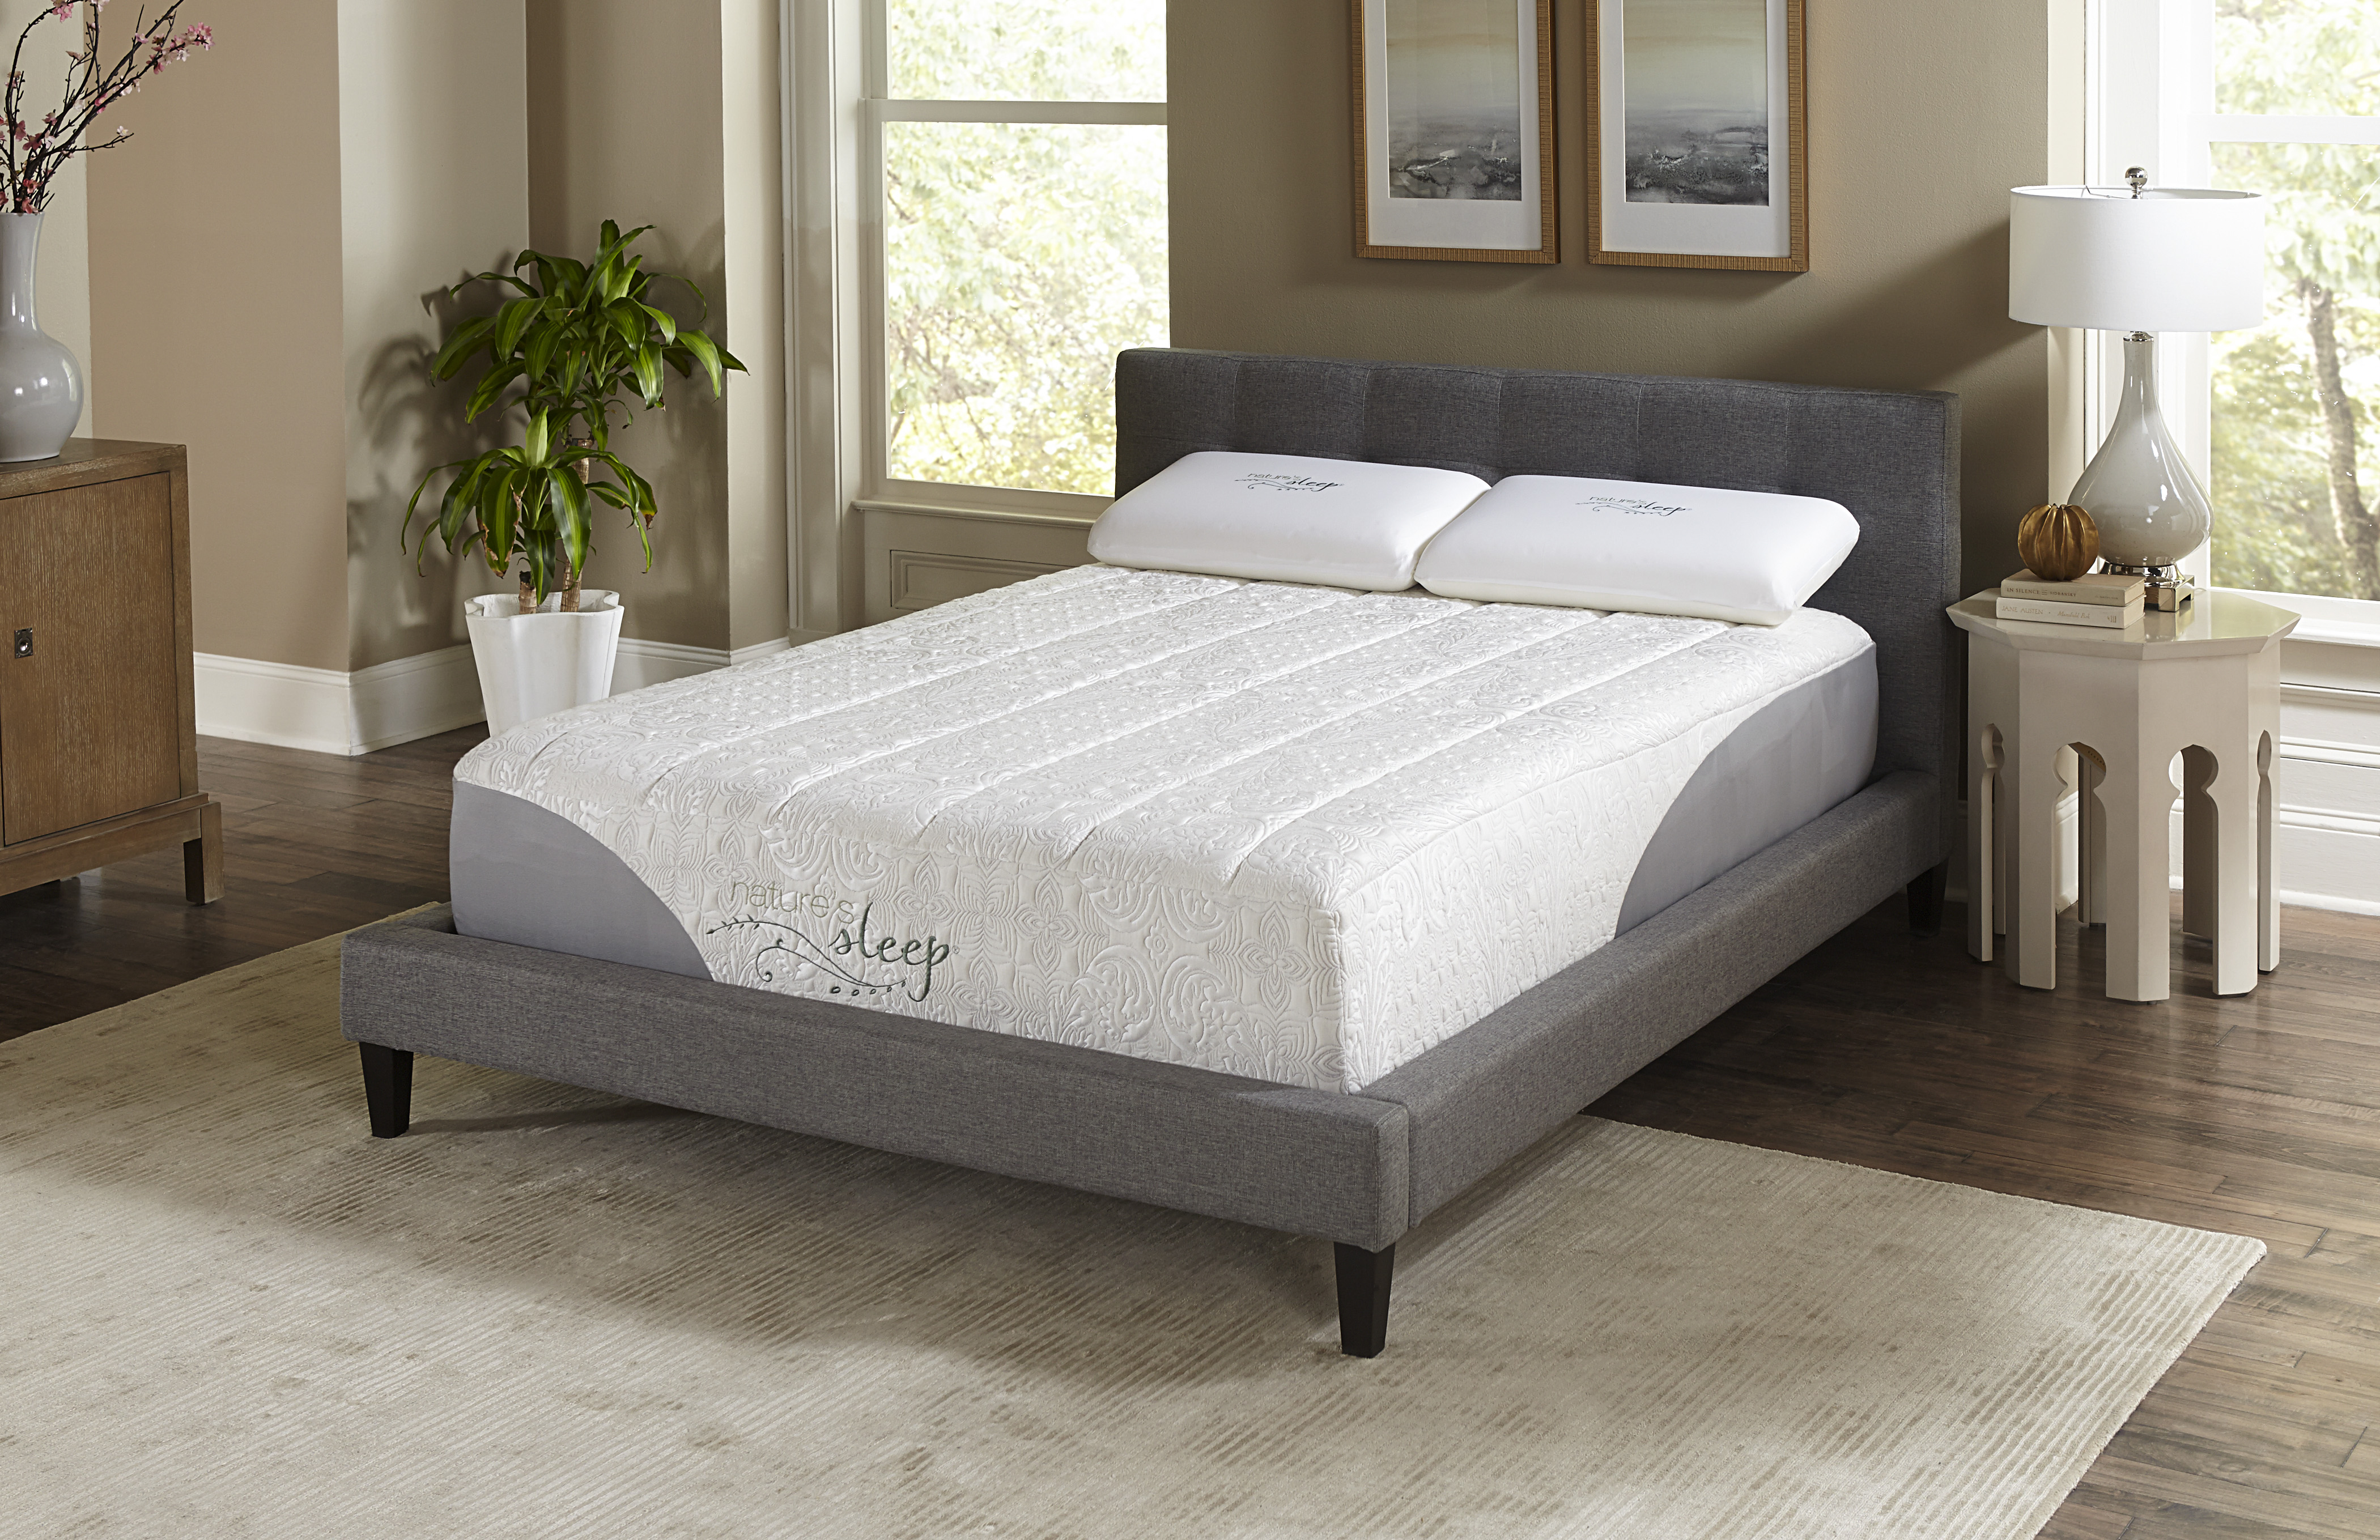 cradlesoft gel memory foam mattress